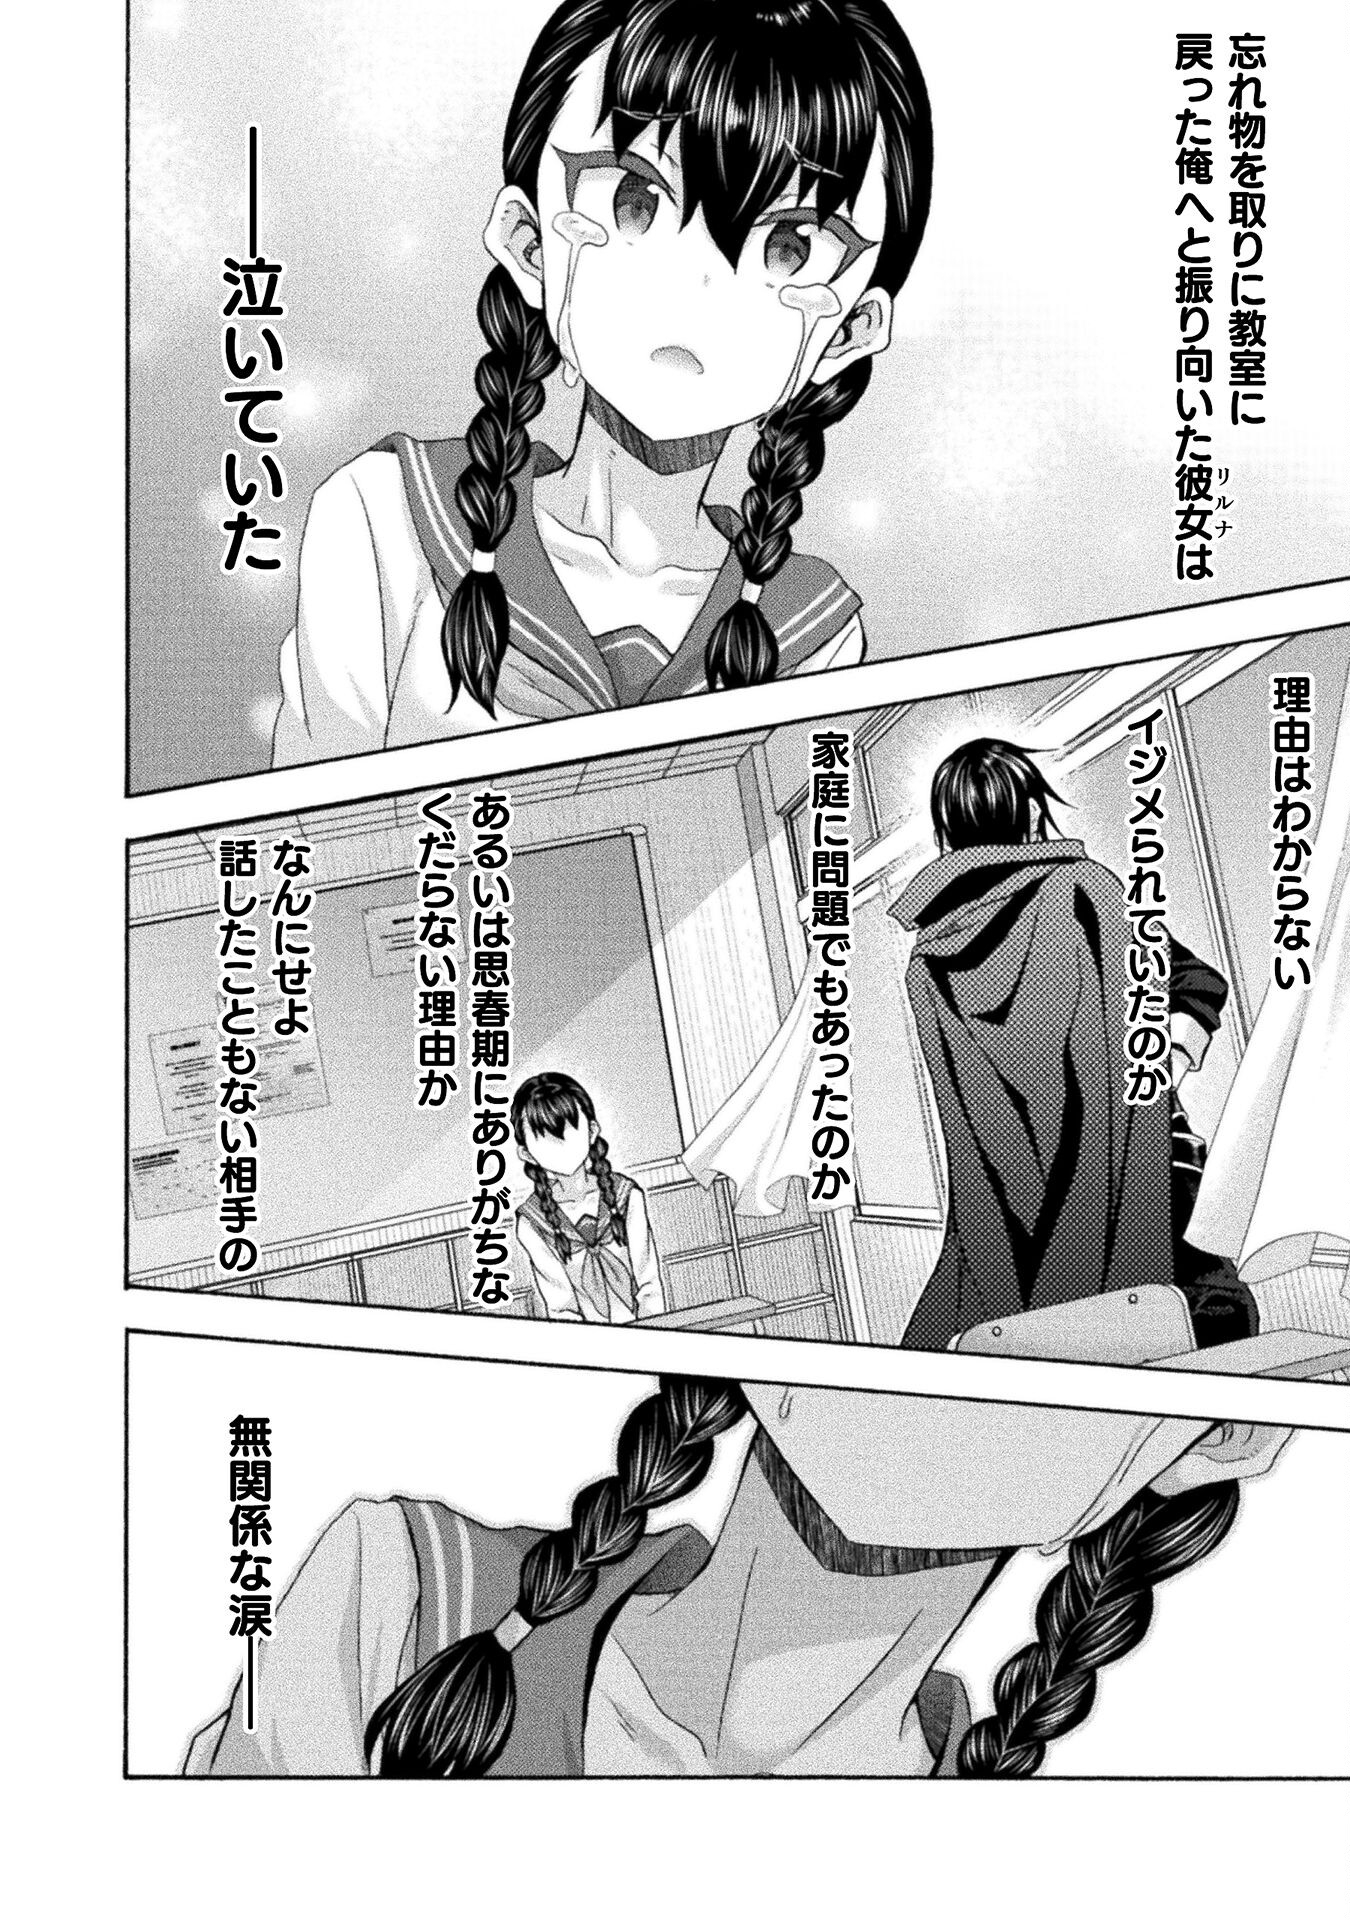 Himekishi ga Classmate! - Chapter 63 - Page 2